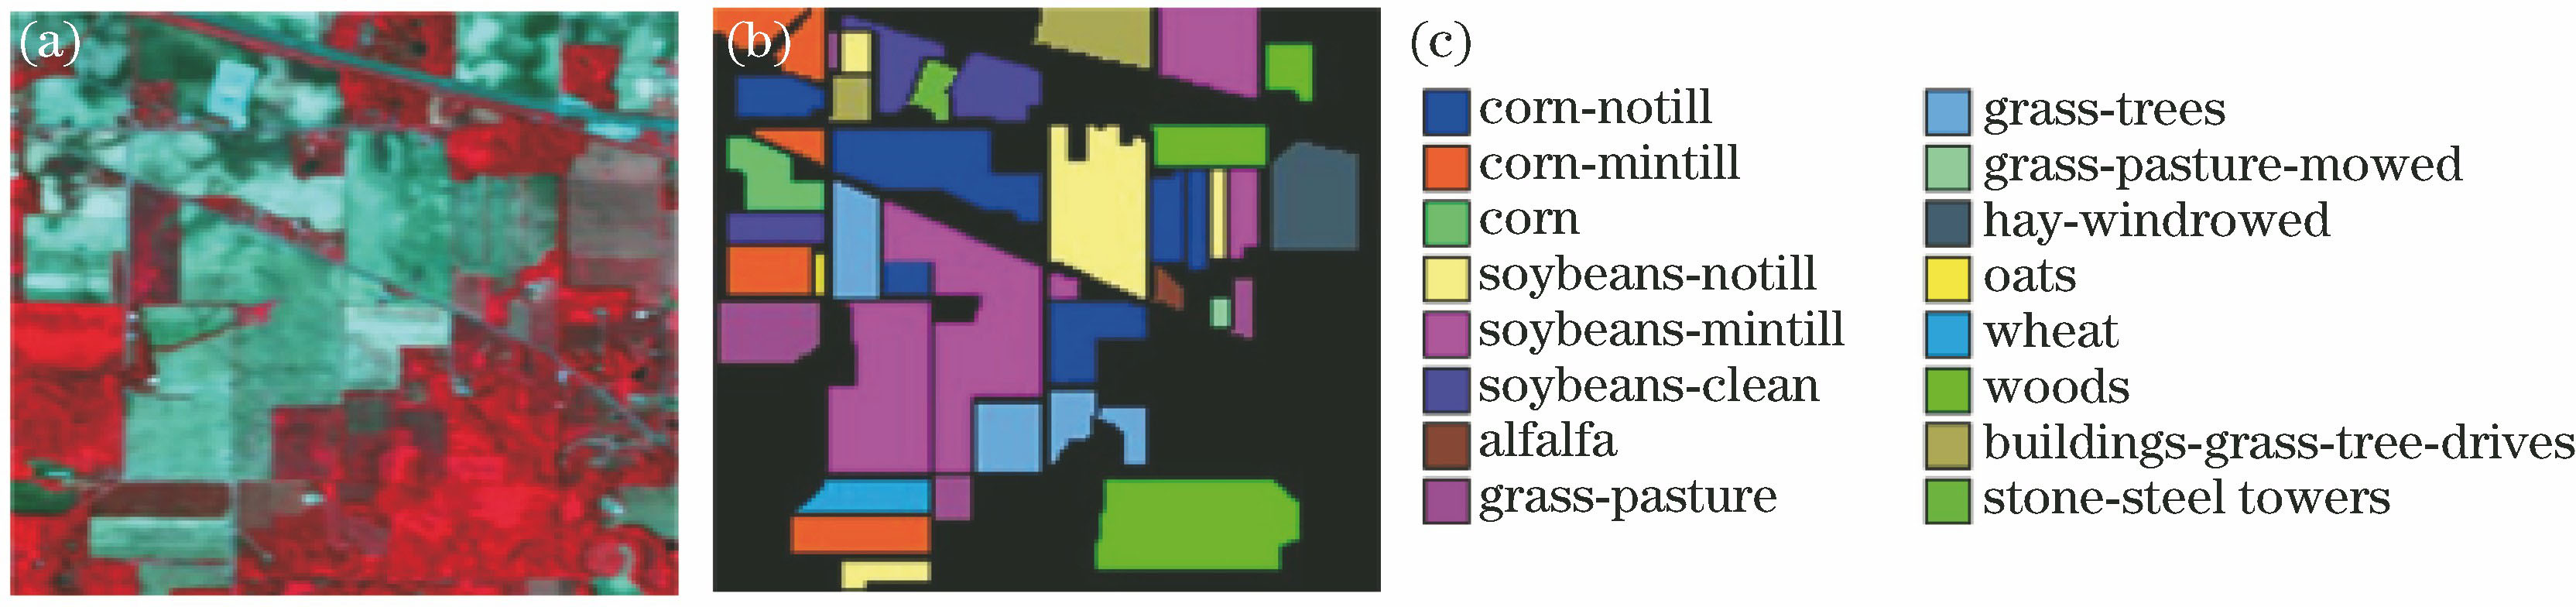 Indian hyperspectral image dataset. (a) False-color composite imge; (b) labeled data; (c) legends of classification